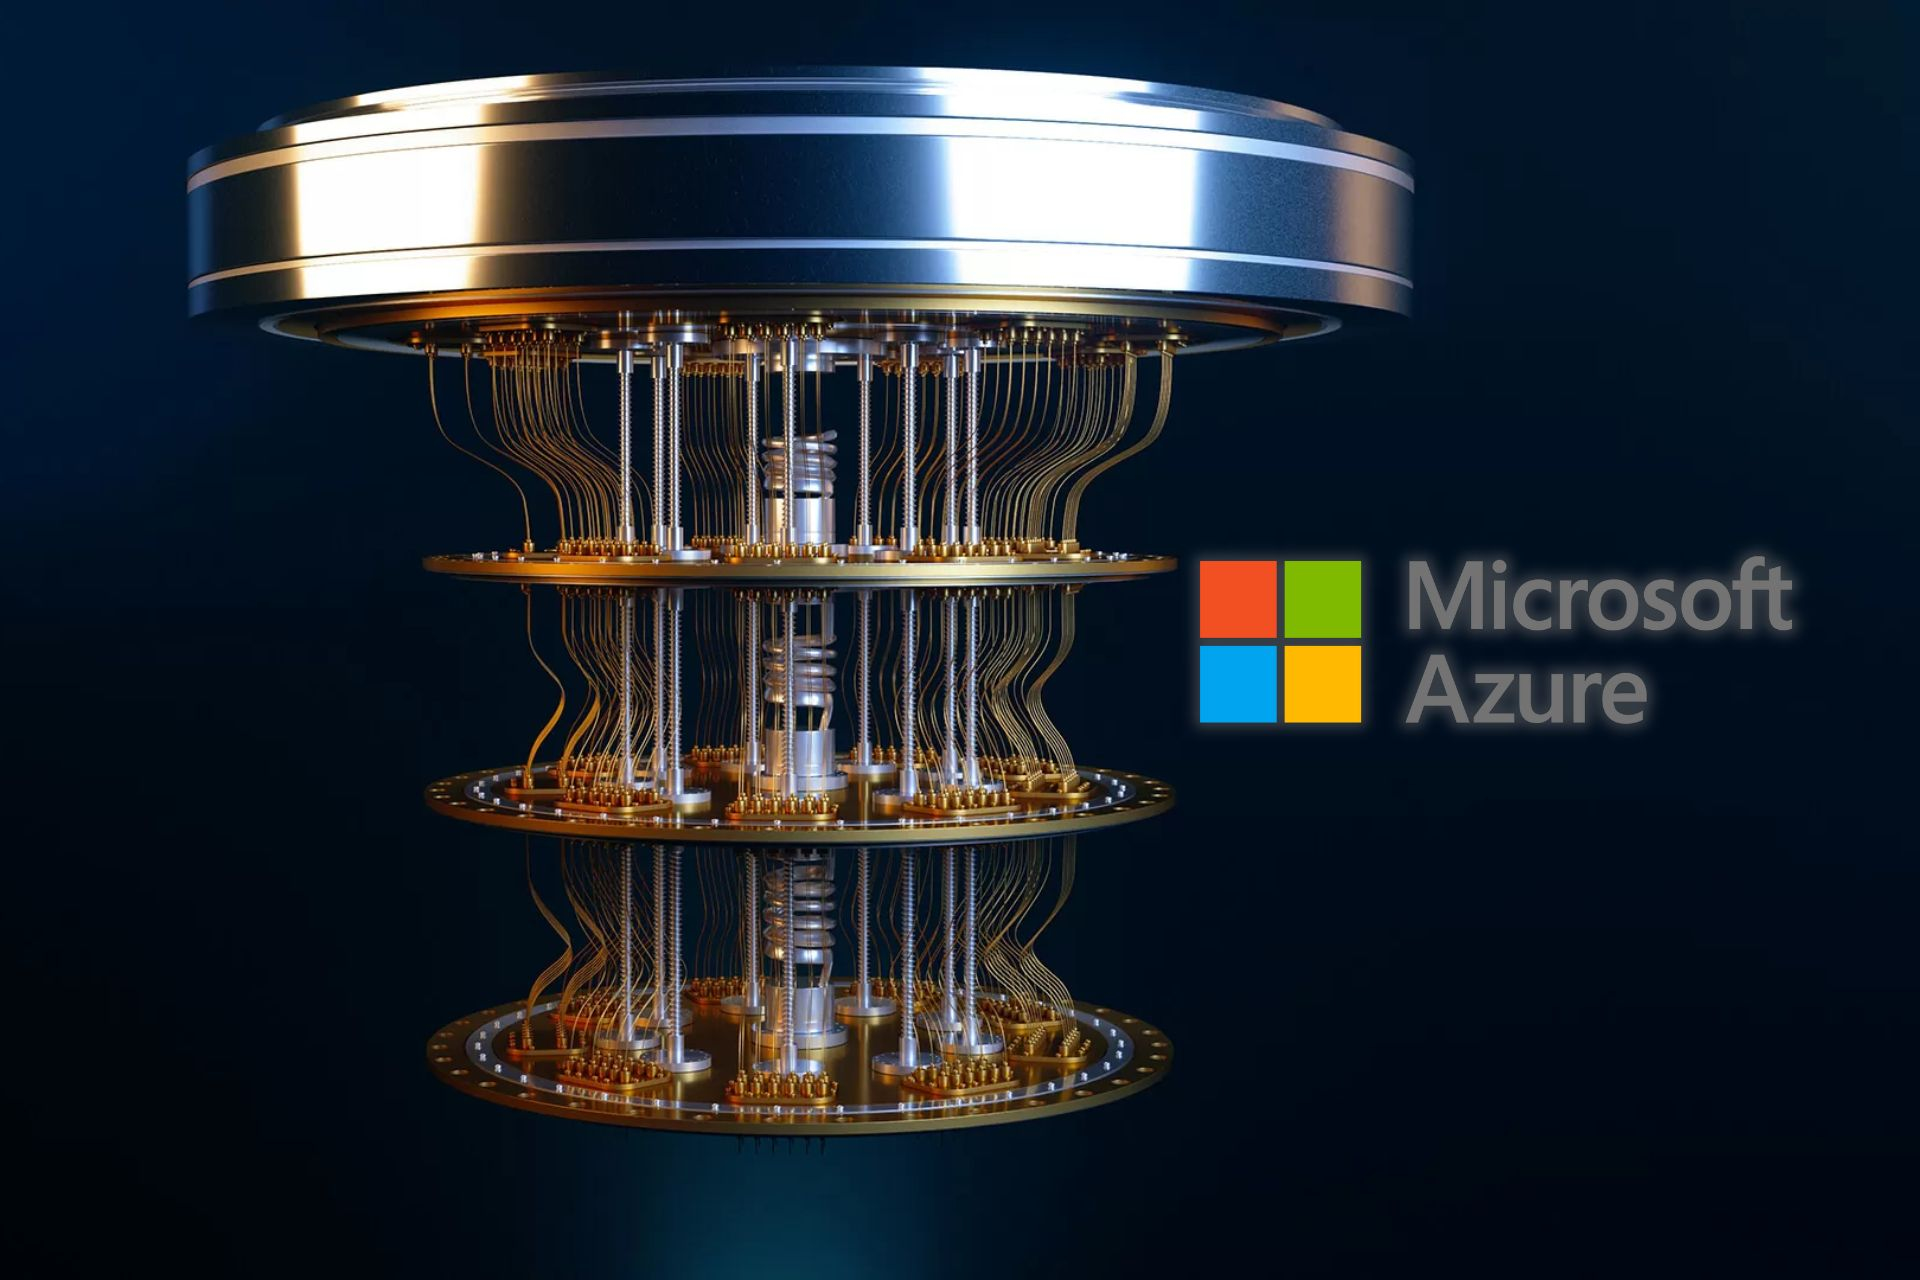 Microsoft Azure logo featured next to a quantum computer